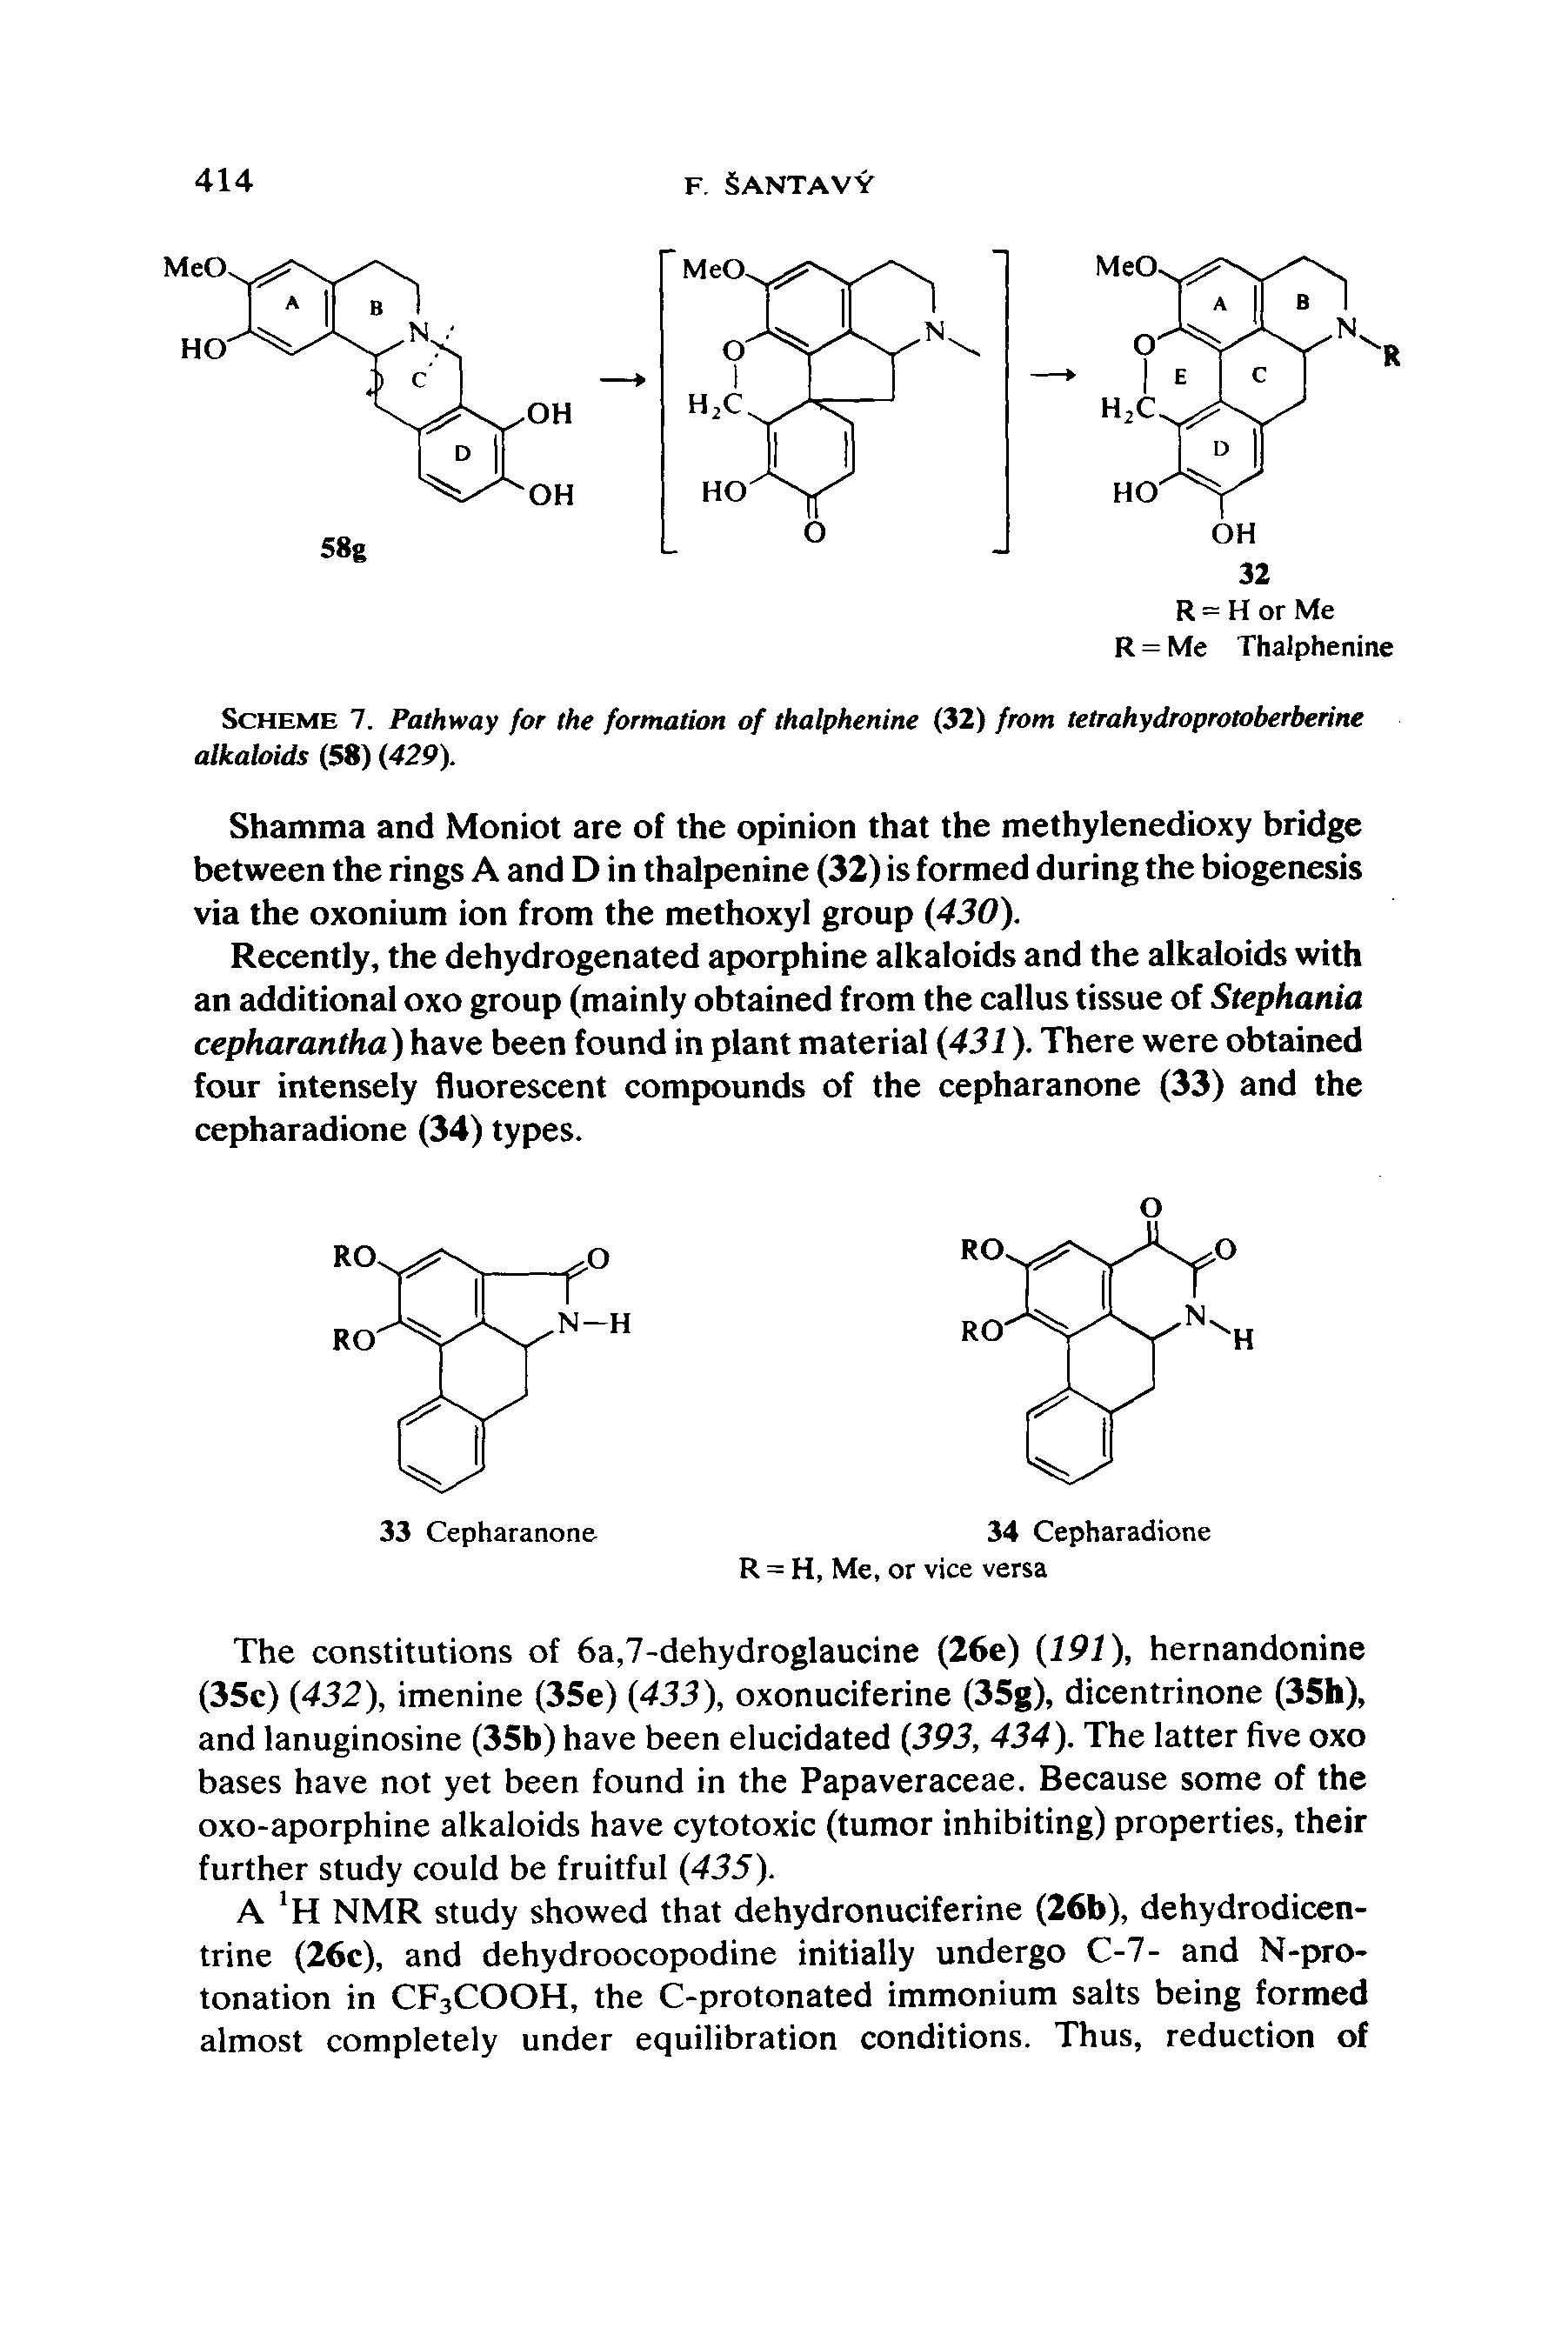 Scheme 7. Pathway for the formation of thalphenine (32) from tetrahydroprotoberberine alkaloids (58) (429).